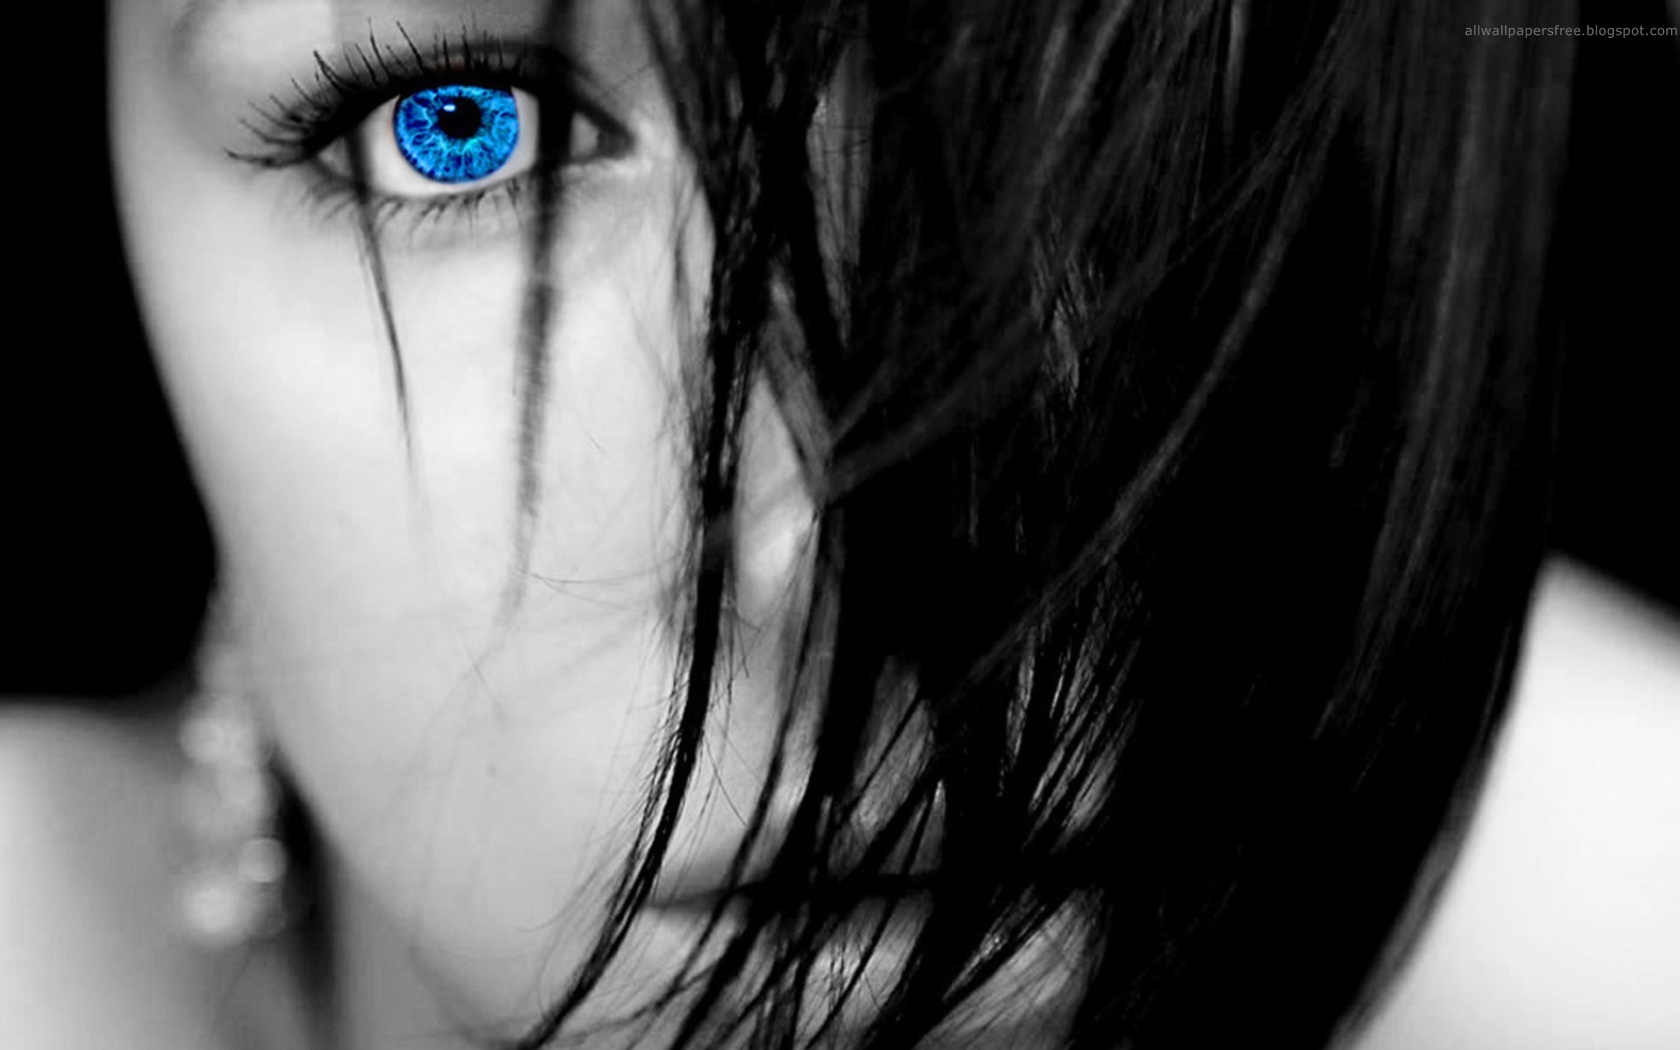 Blue Emo Eye wallpaper from Eyes wallpapers